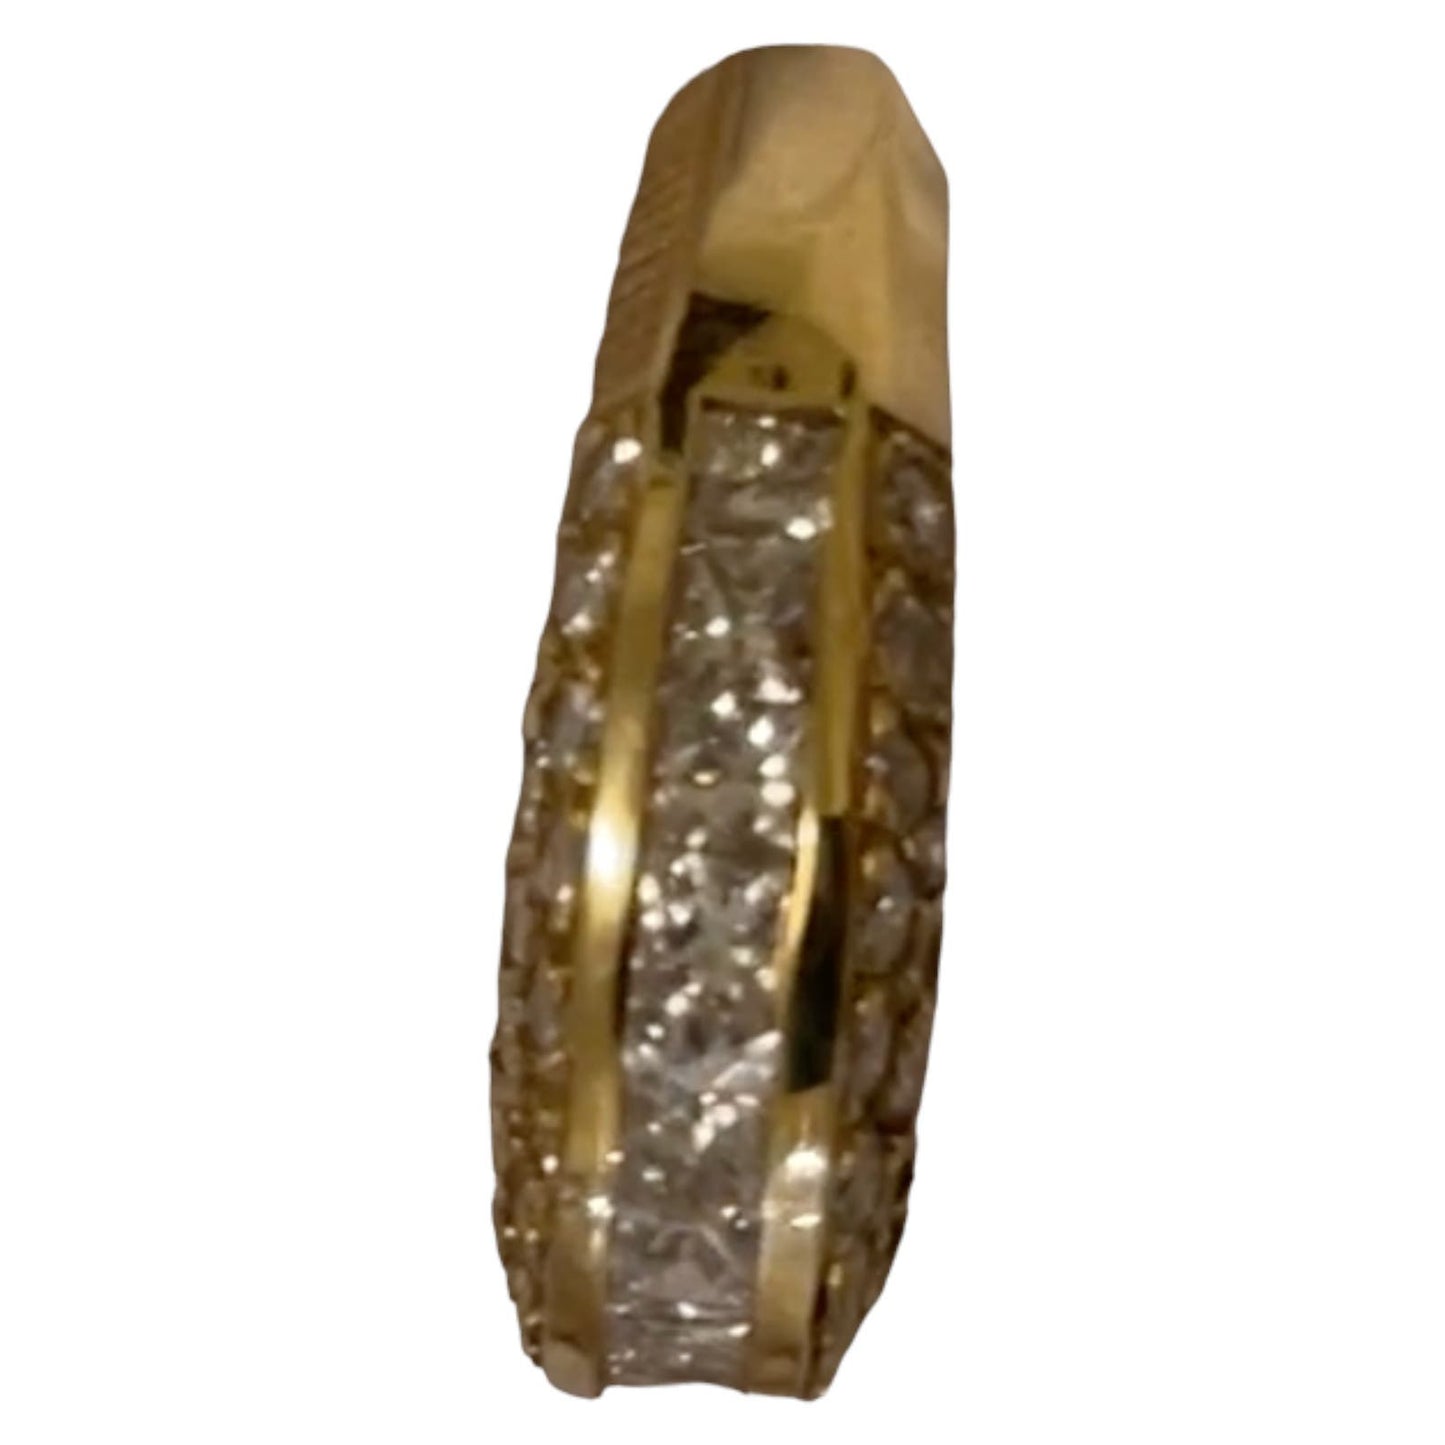 Exquisite 14K Yellow Gold 2.05 Ct Diamond Wedding Band Size 7 USA Made